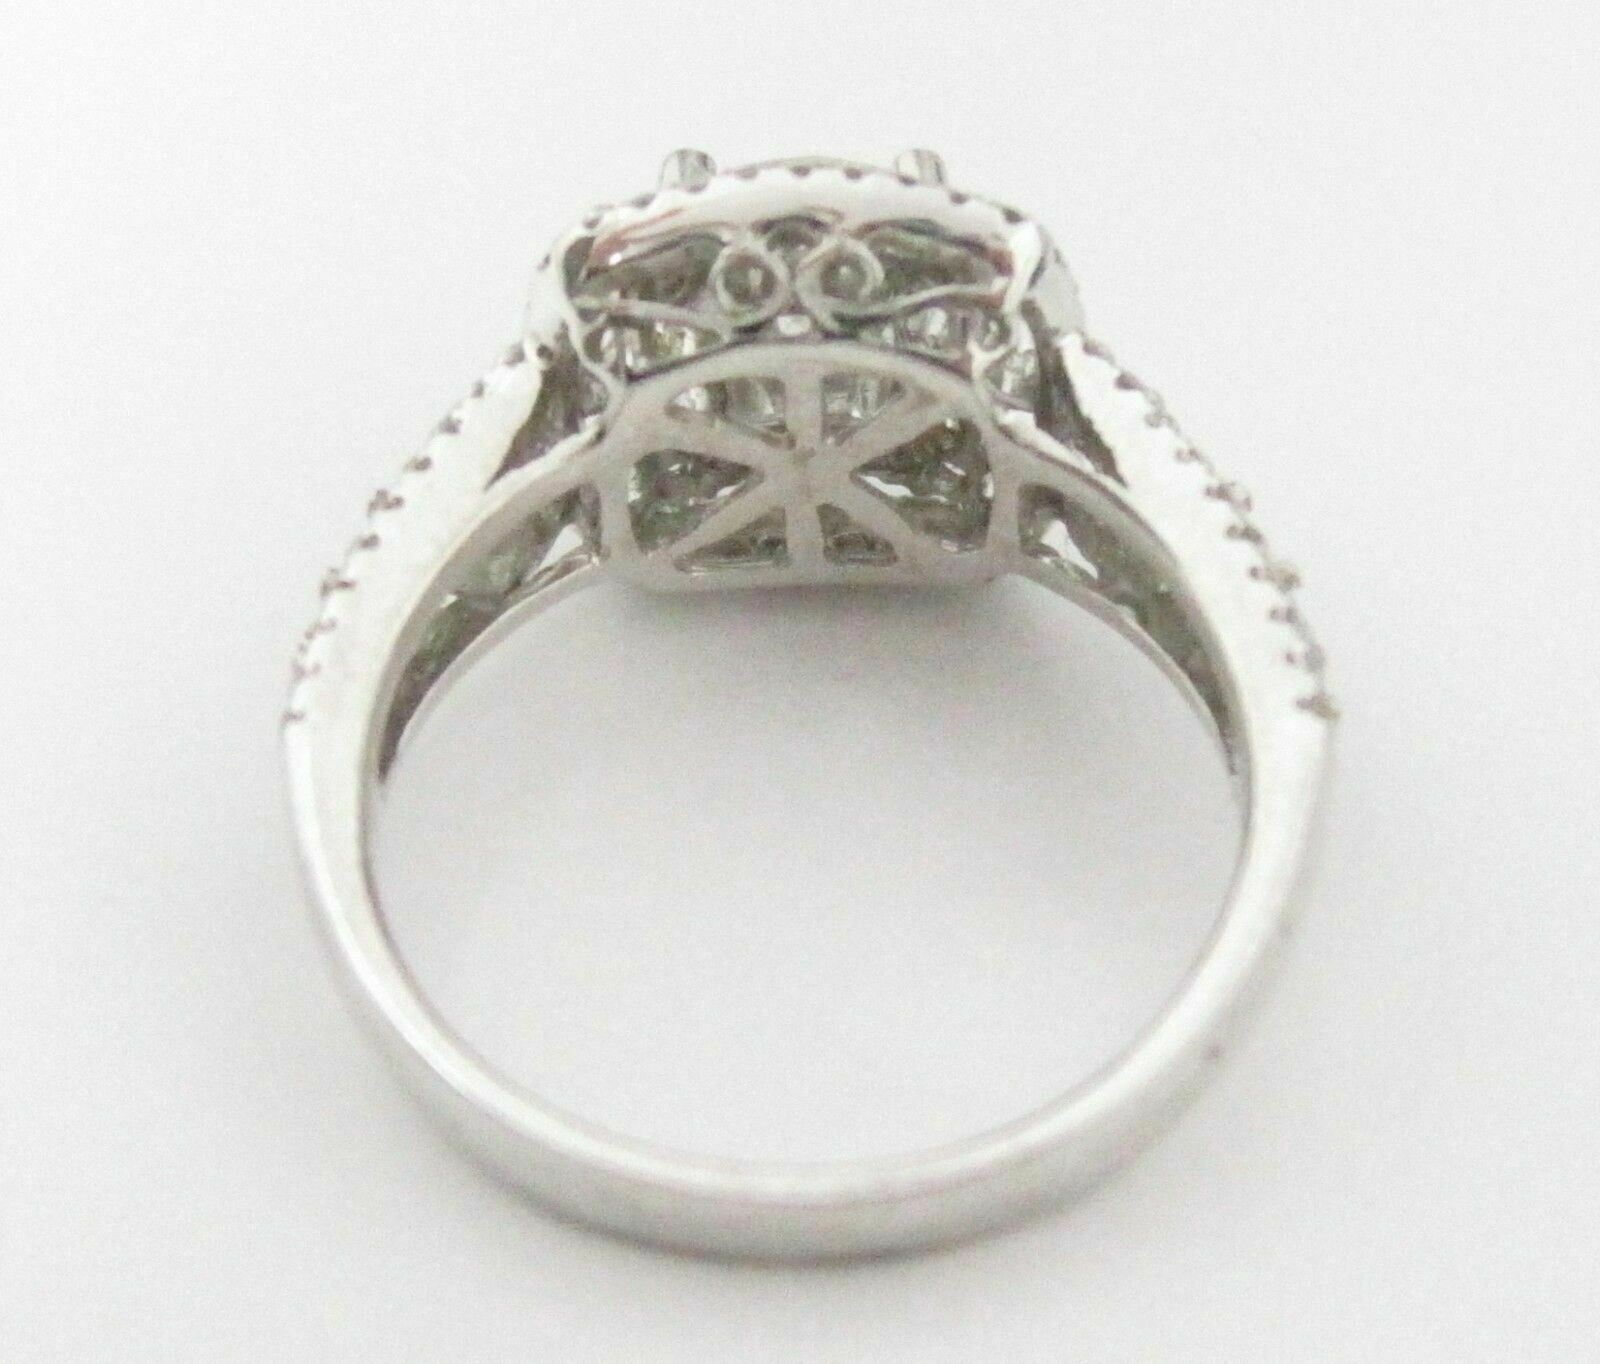 1.53 TCW Round Diamond Halo Art-Deco Engagement Ring Size 6.75 18kt White Gold